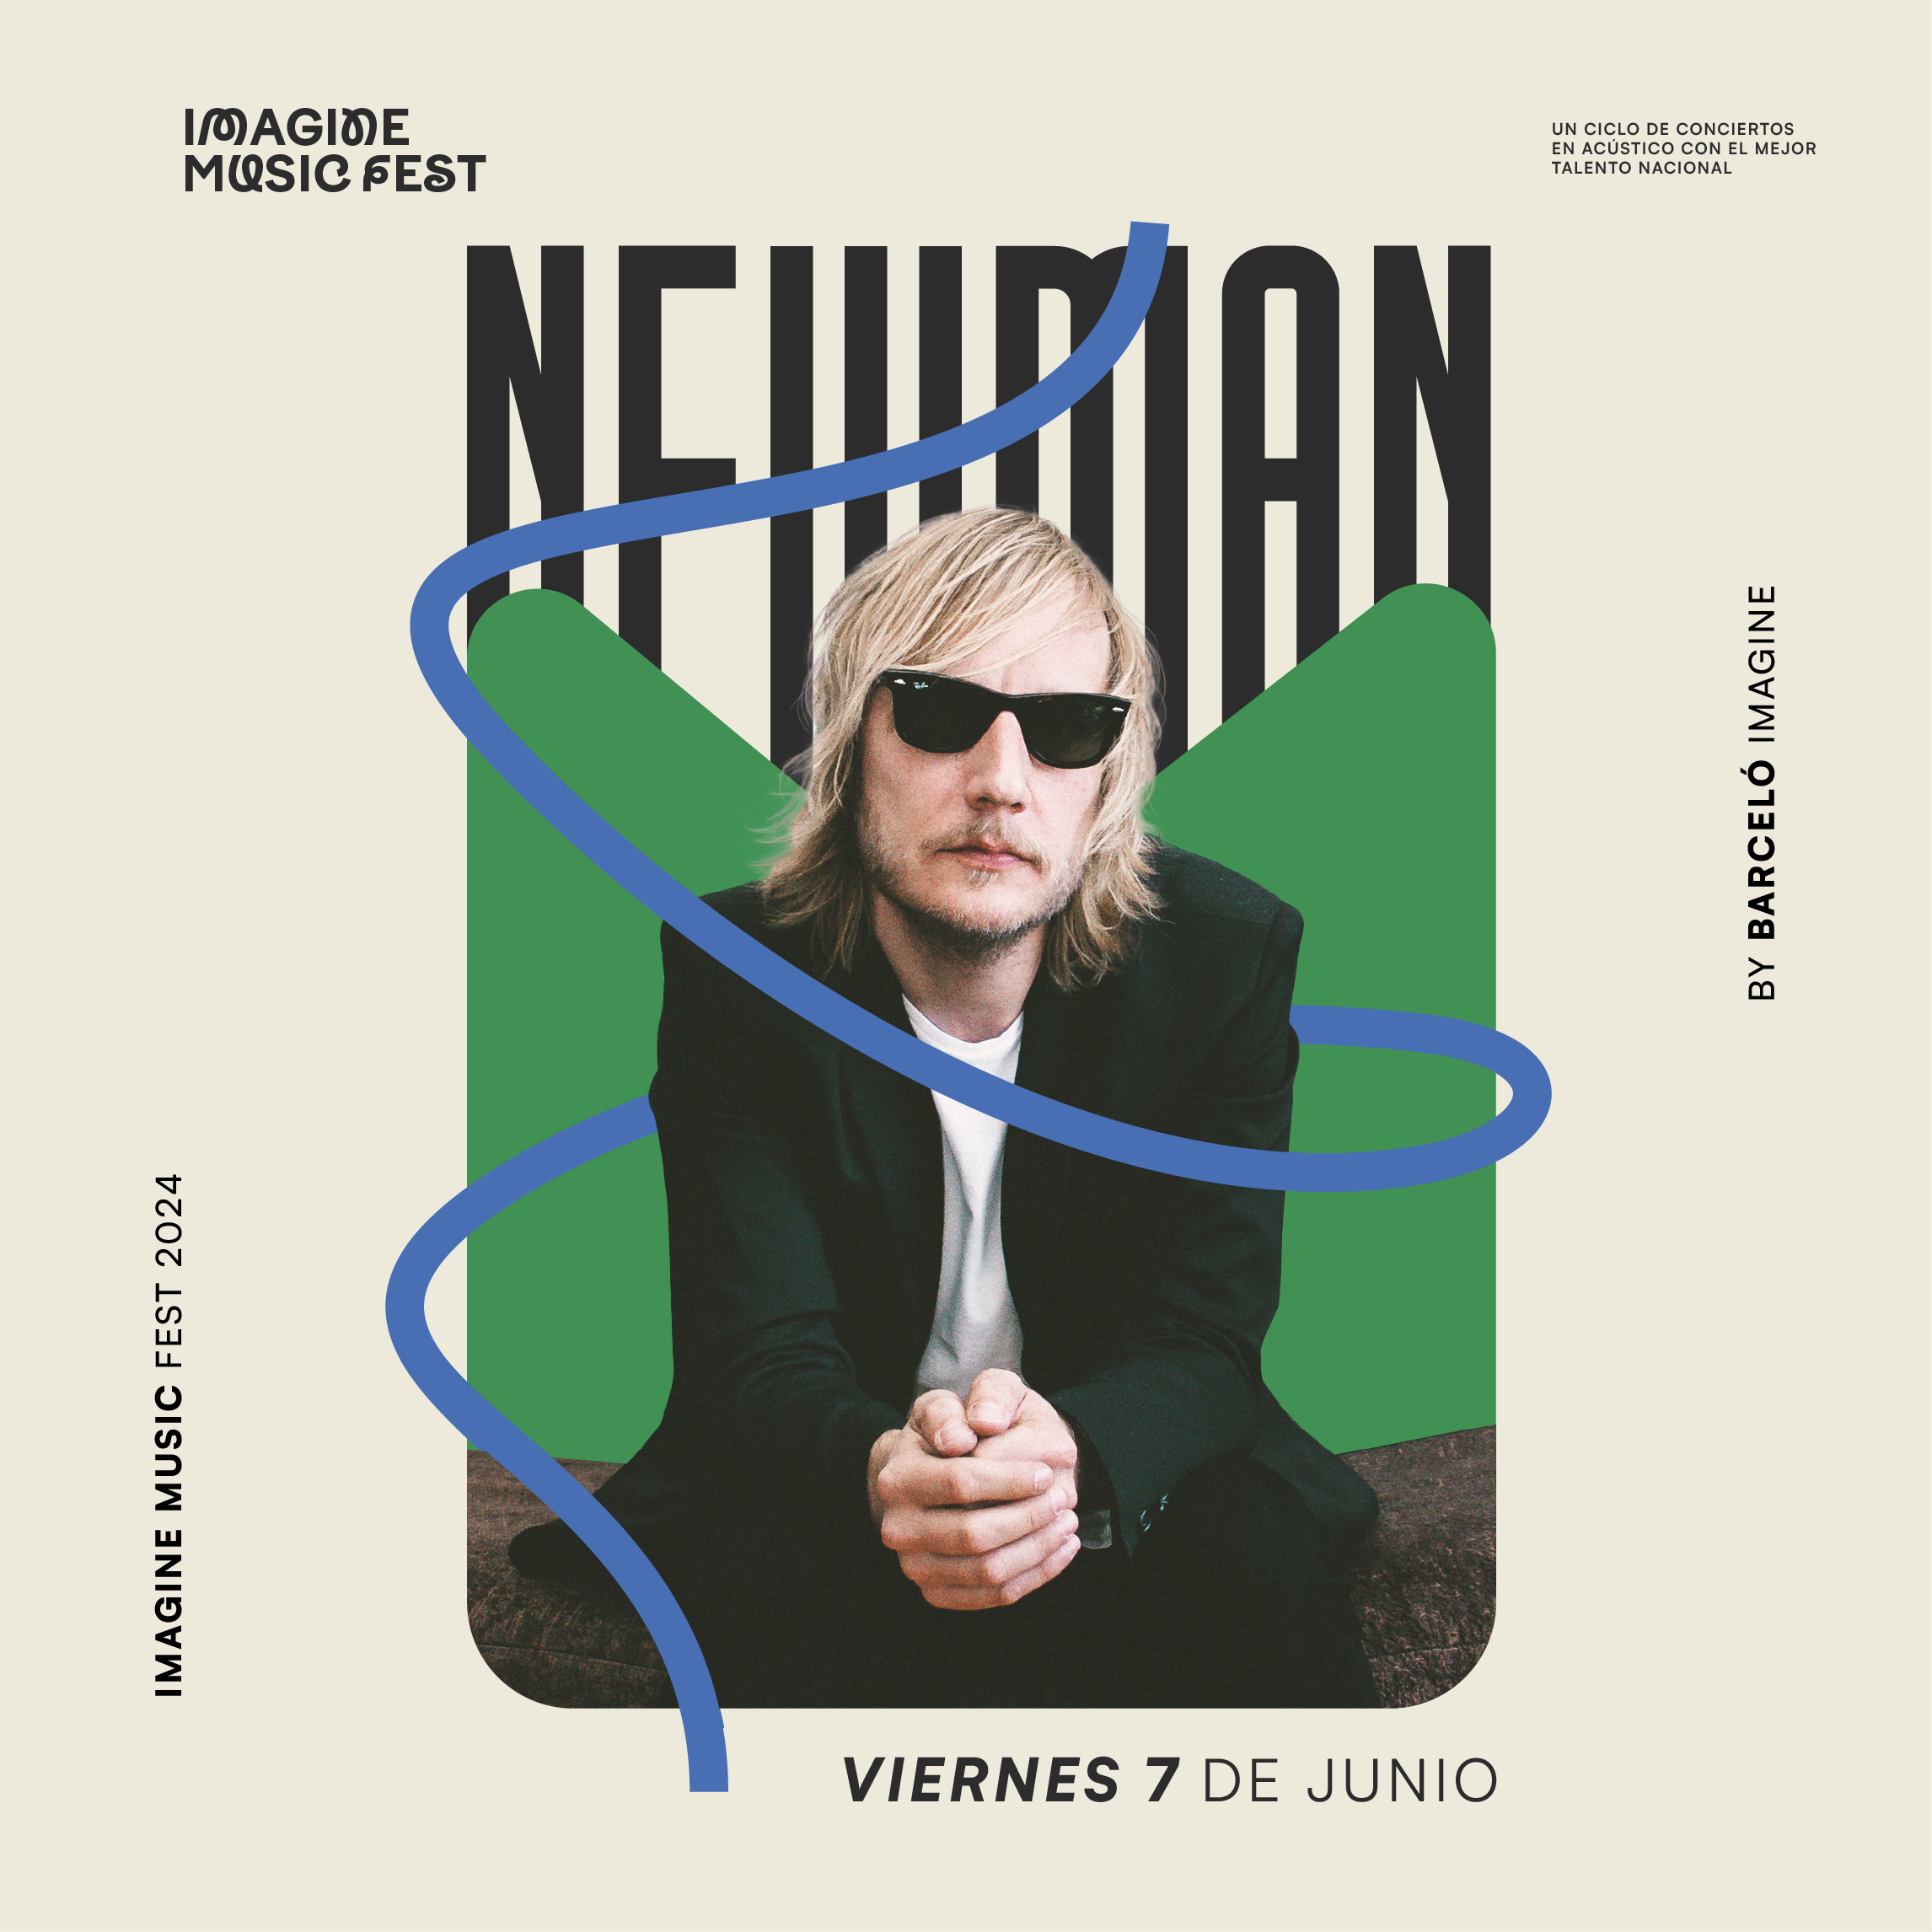 Neuman en acústico en Imagine Music Fest Madrid - Mutick